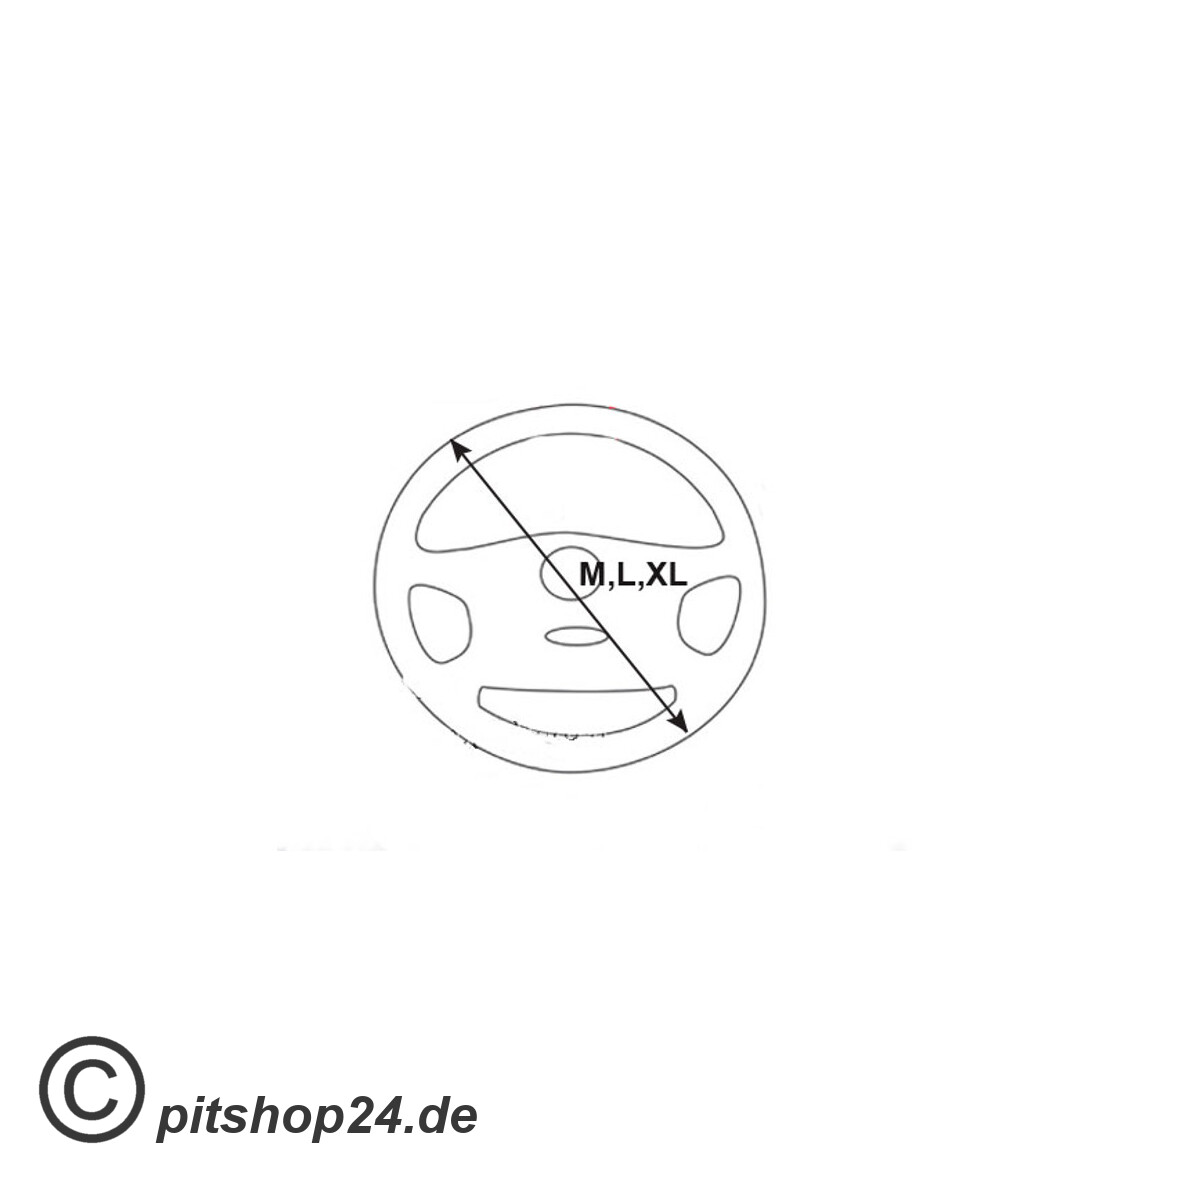 Auto Lenkradbezug - YGYQZ Leder Lenkradbezug Universalgröße M 37-38 cm,  Rutschfest, Weiche, Atmungsaktiv, Schwarz : : Auto & Motorrad